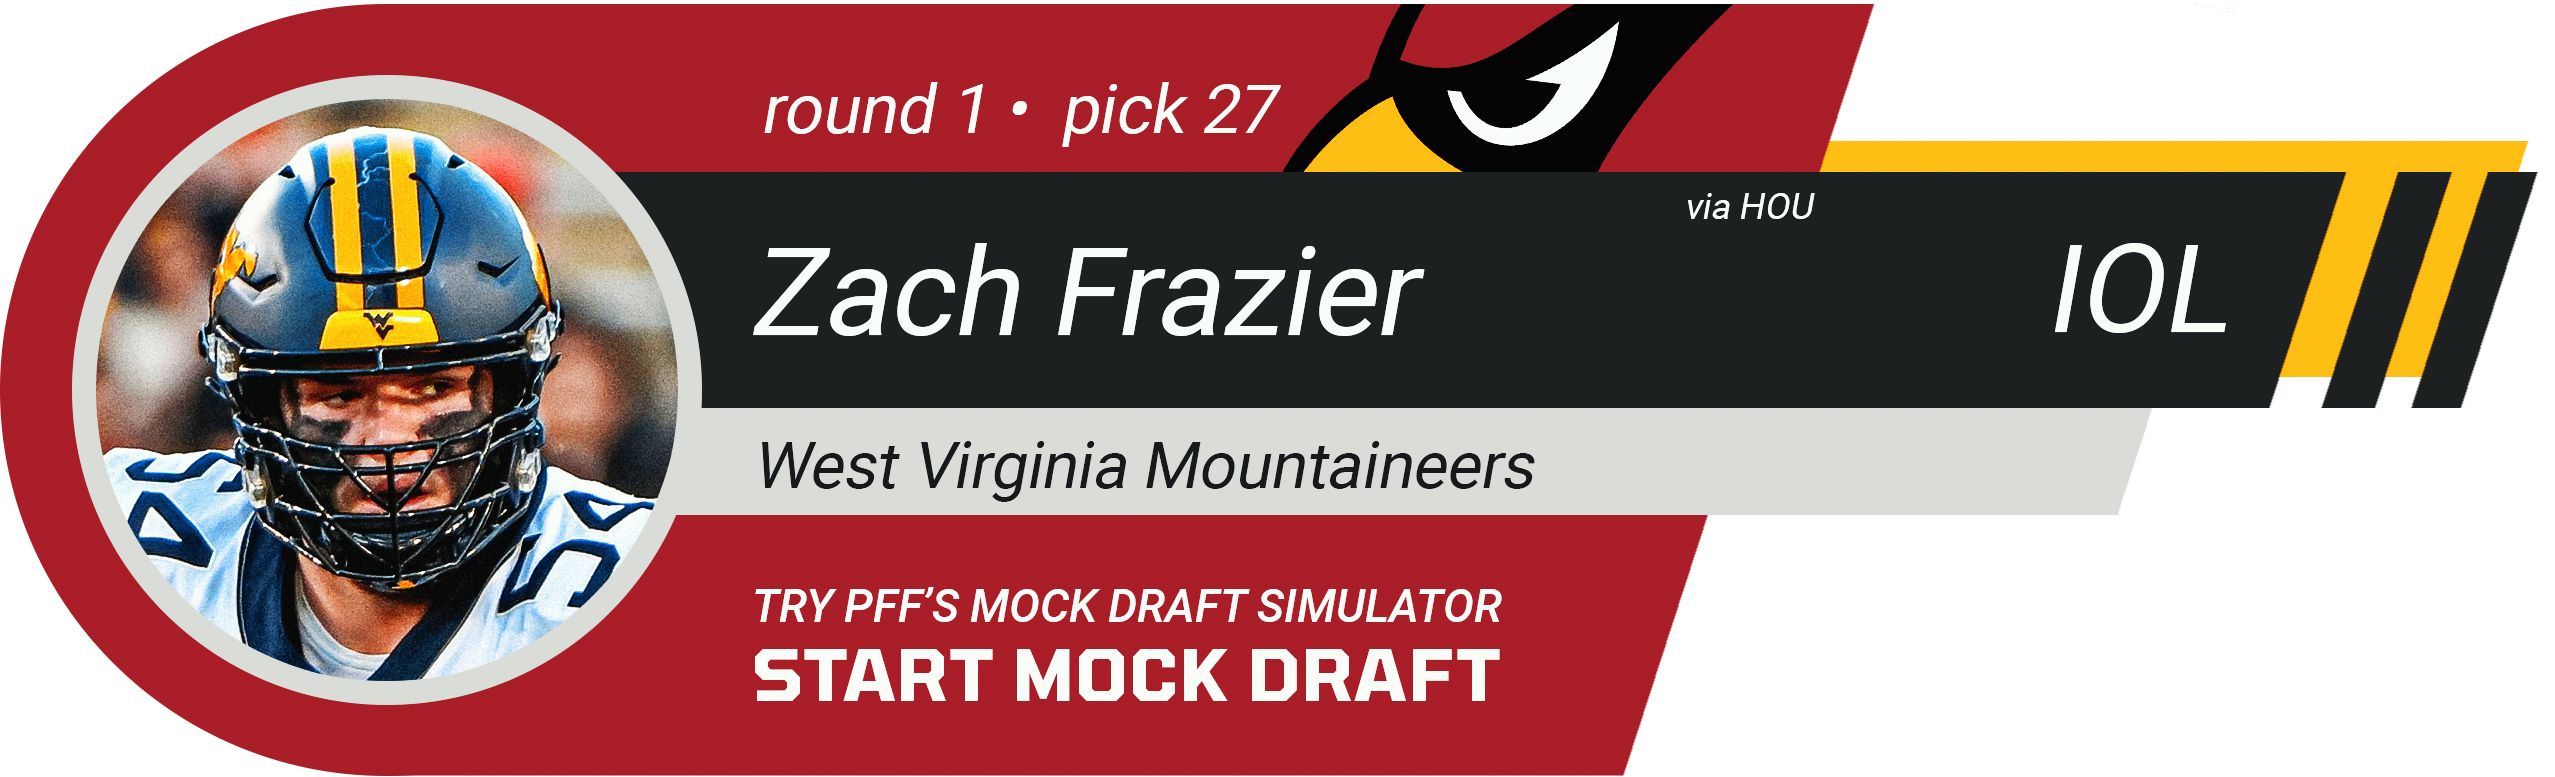 Arizona Cardinals (from Texans): Zach Frazier, C, West Virginia